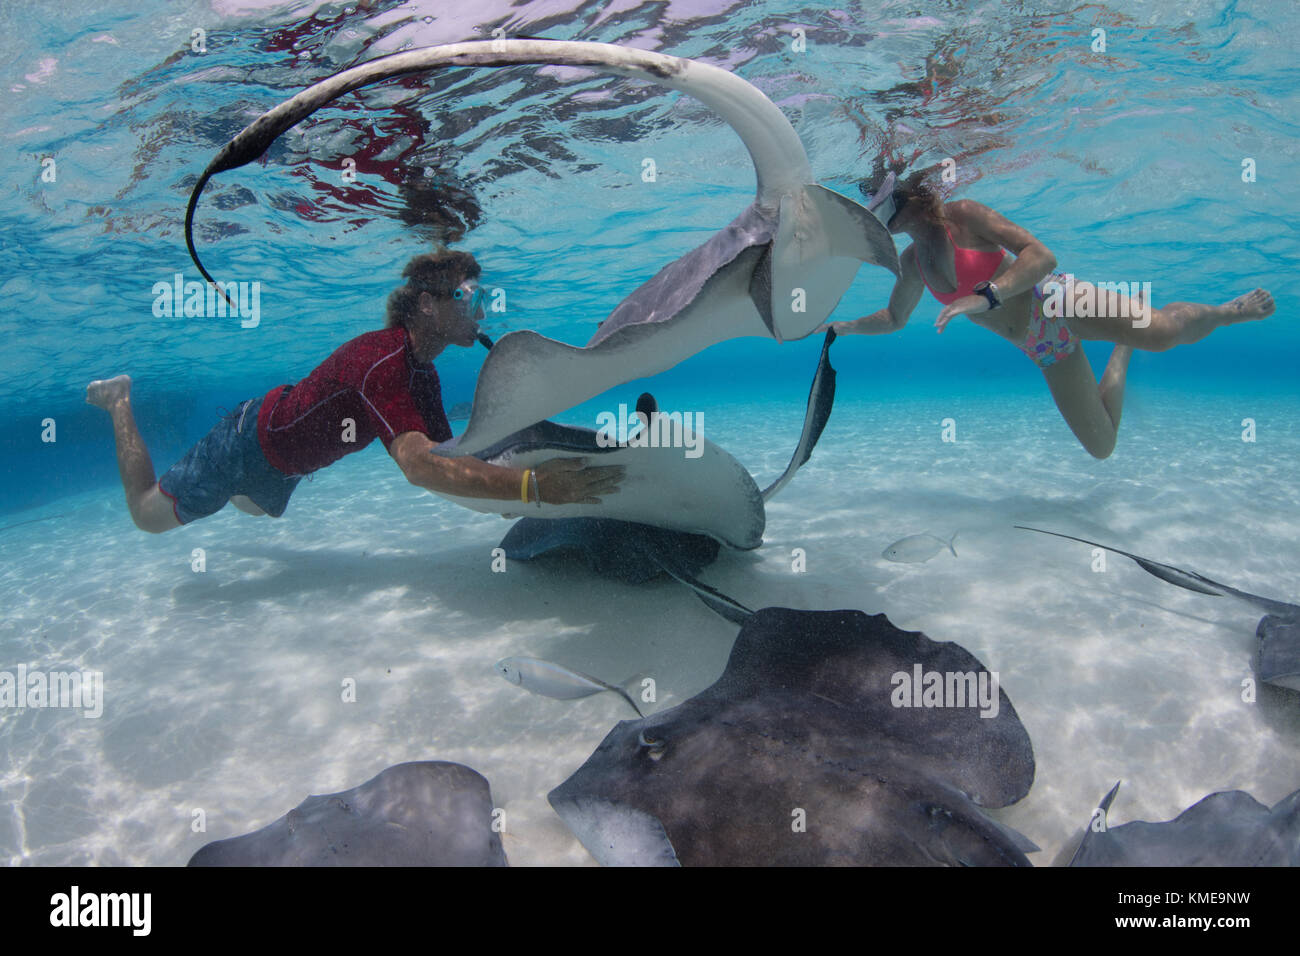 Snorkelers interact with Southern stingrays at the Sandbar, Grand Cayman Stock Photo